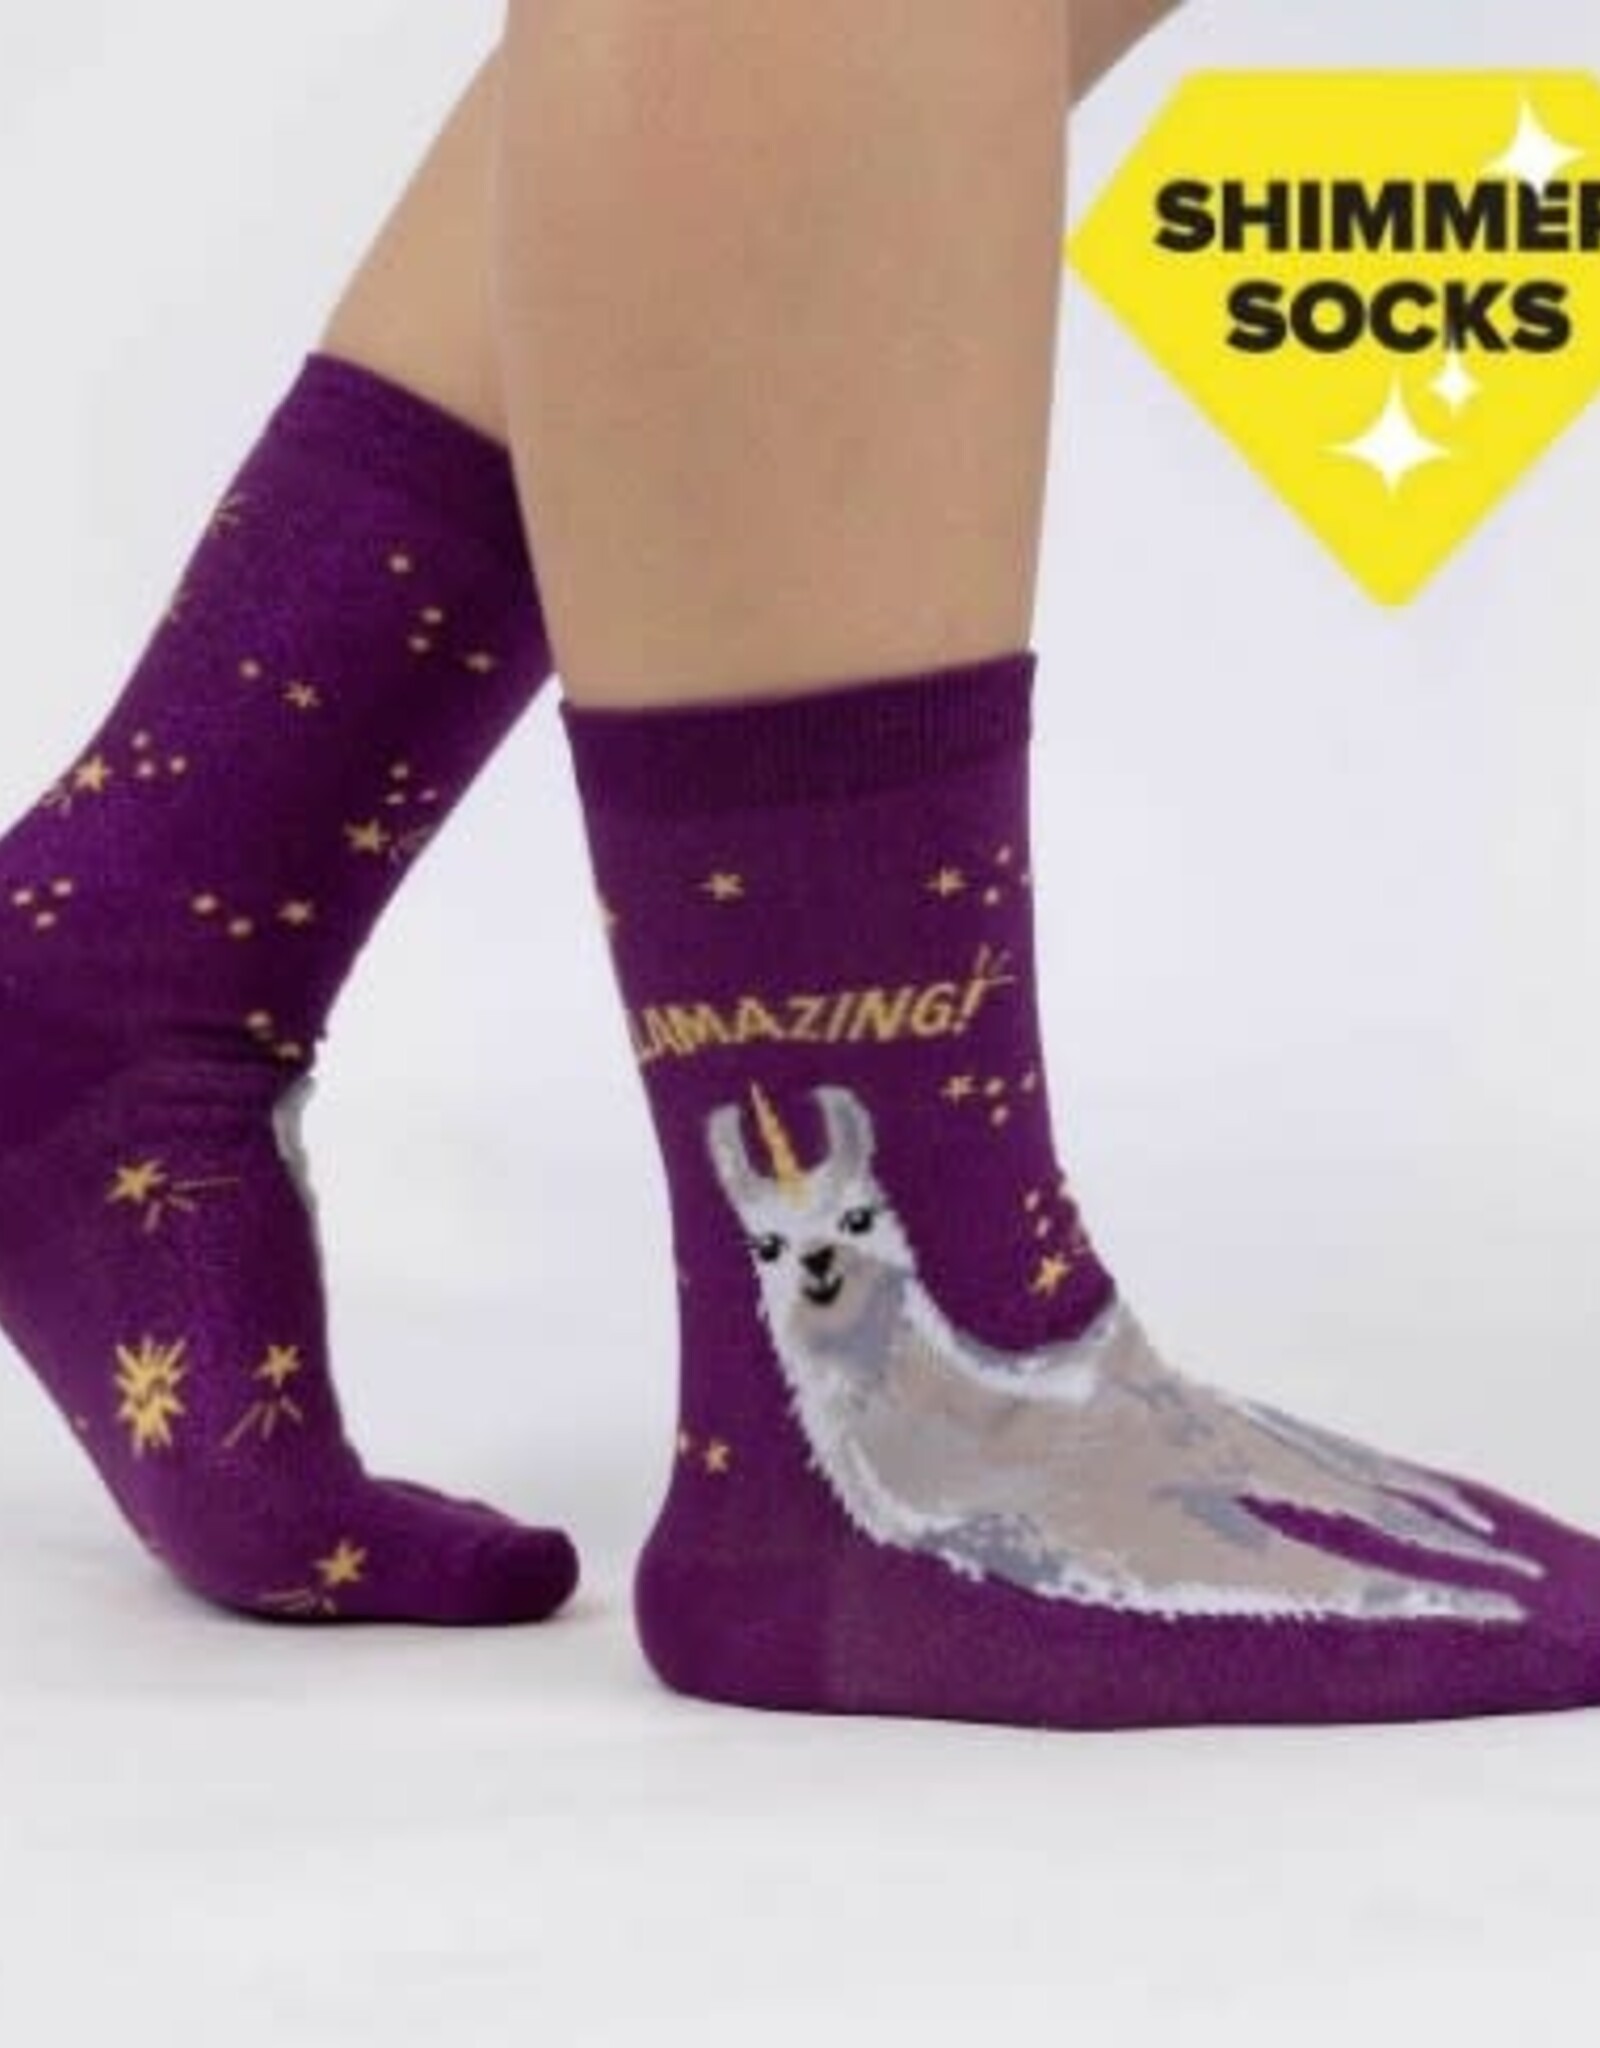 Sock It To Me WOMEN'S CREW - LLAMAZING (SHIMMER)